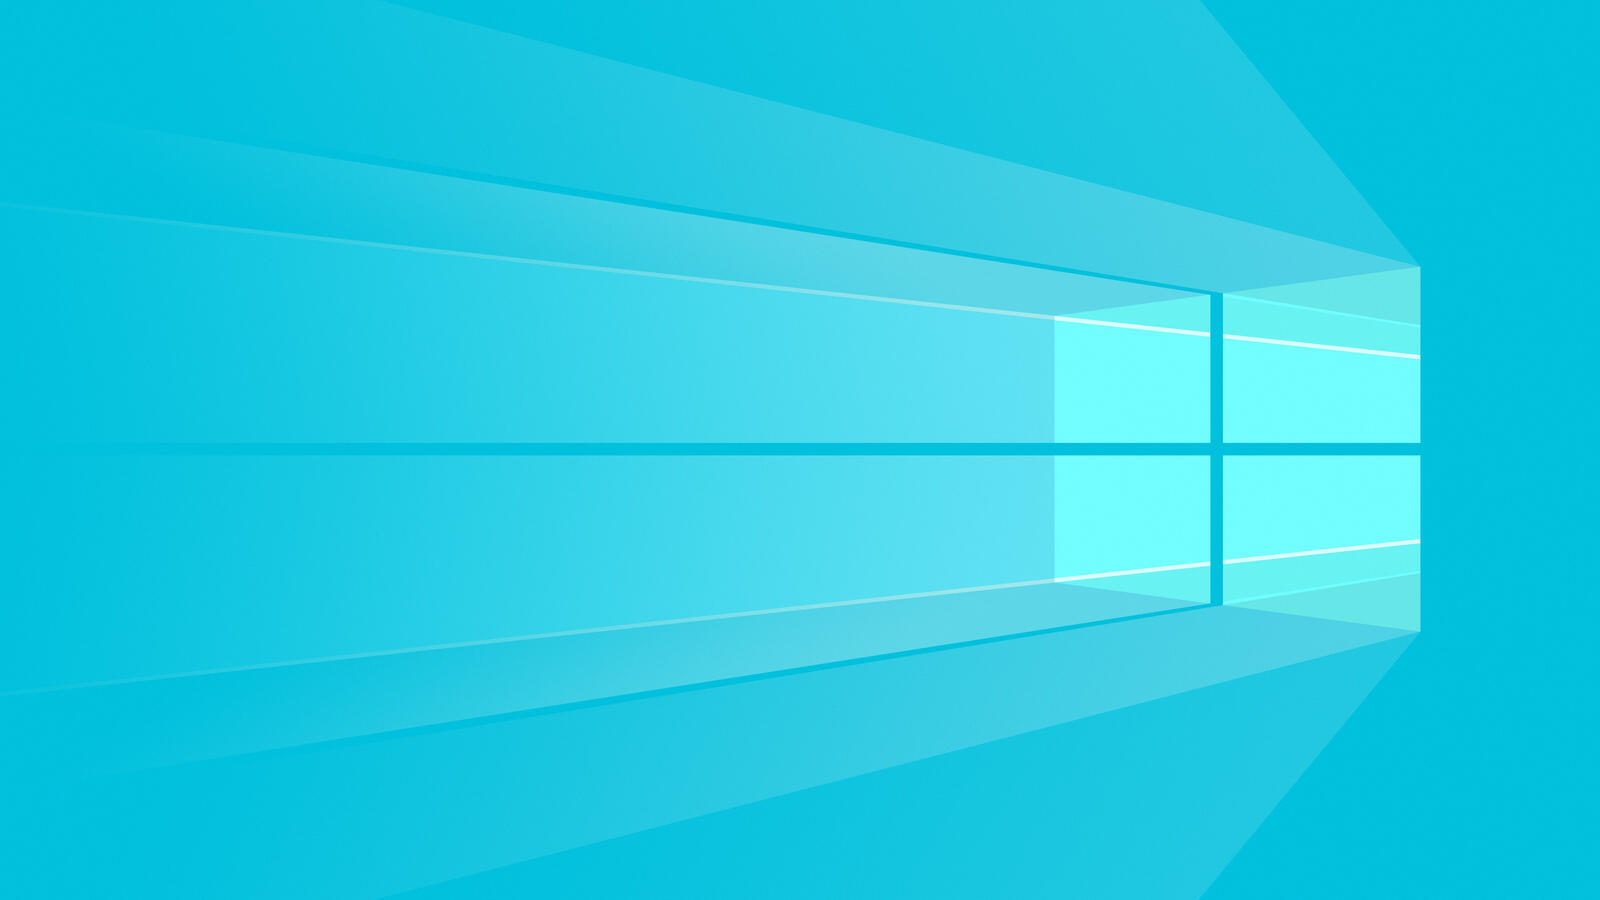 Wallpapers hi-tech Windows 10 miscellaneous on the desktop